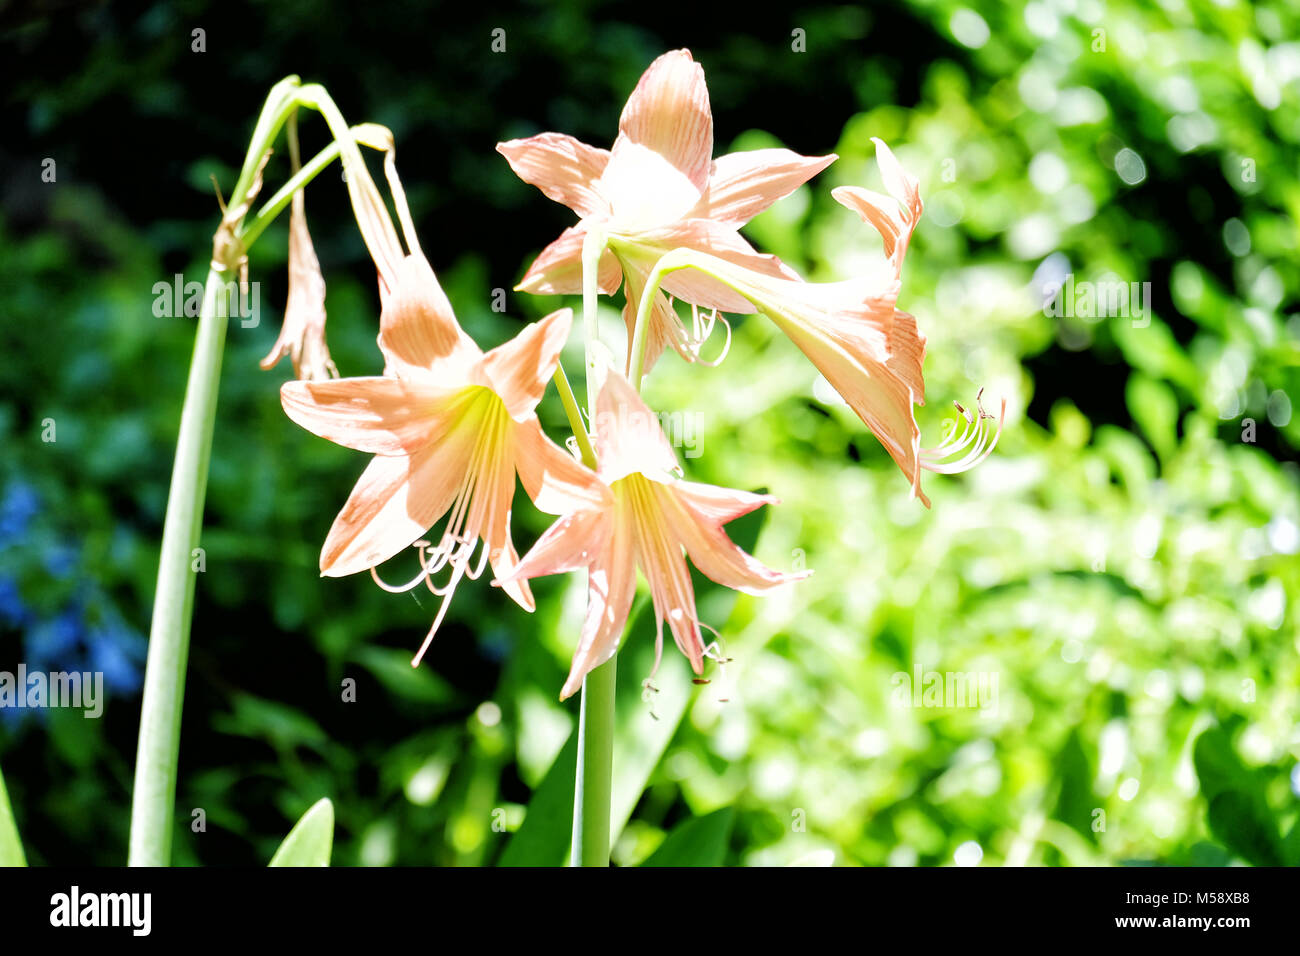 Three Amaryllis flowers in the outdoor garden Stock Photo